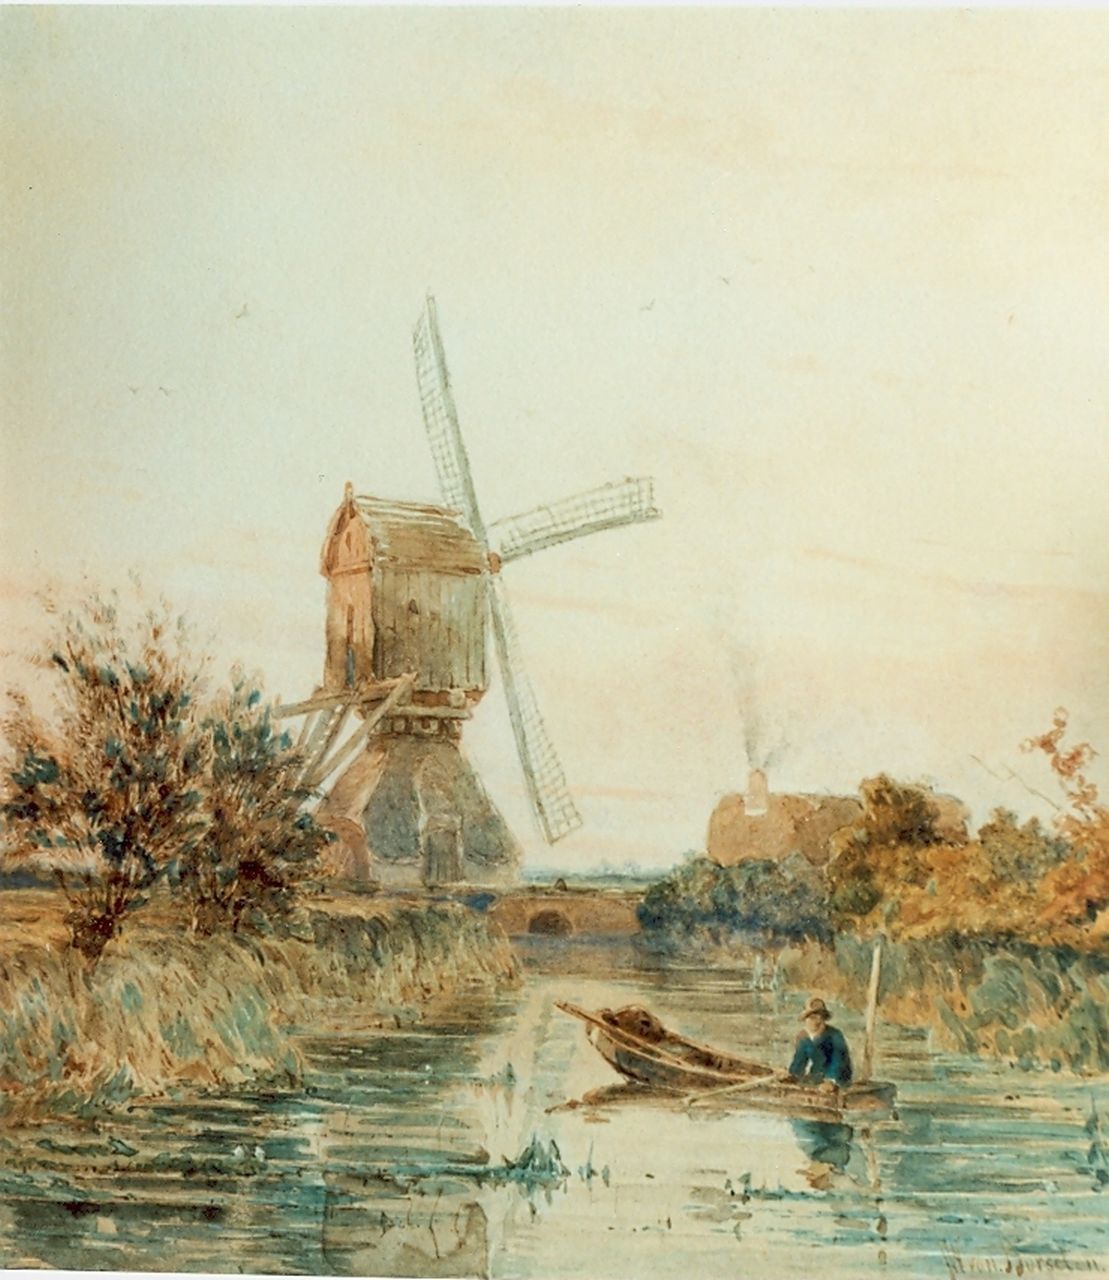 Borselen J.W. van | Jan Willem van Borselen, A polder landscape, watercolour on paper 22.0 x 21.0 cm, signed l.r. and dated 1861